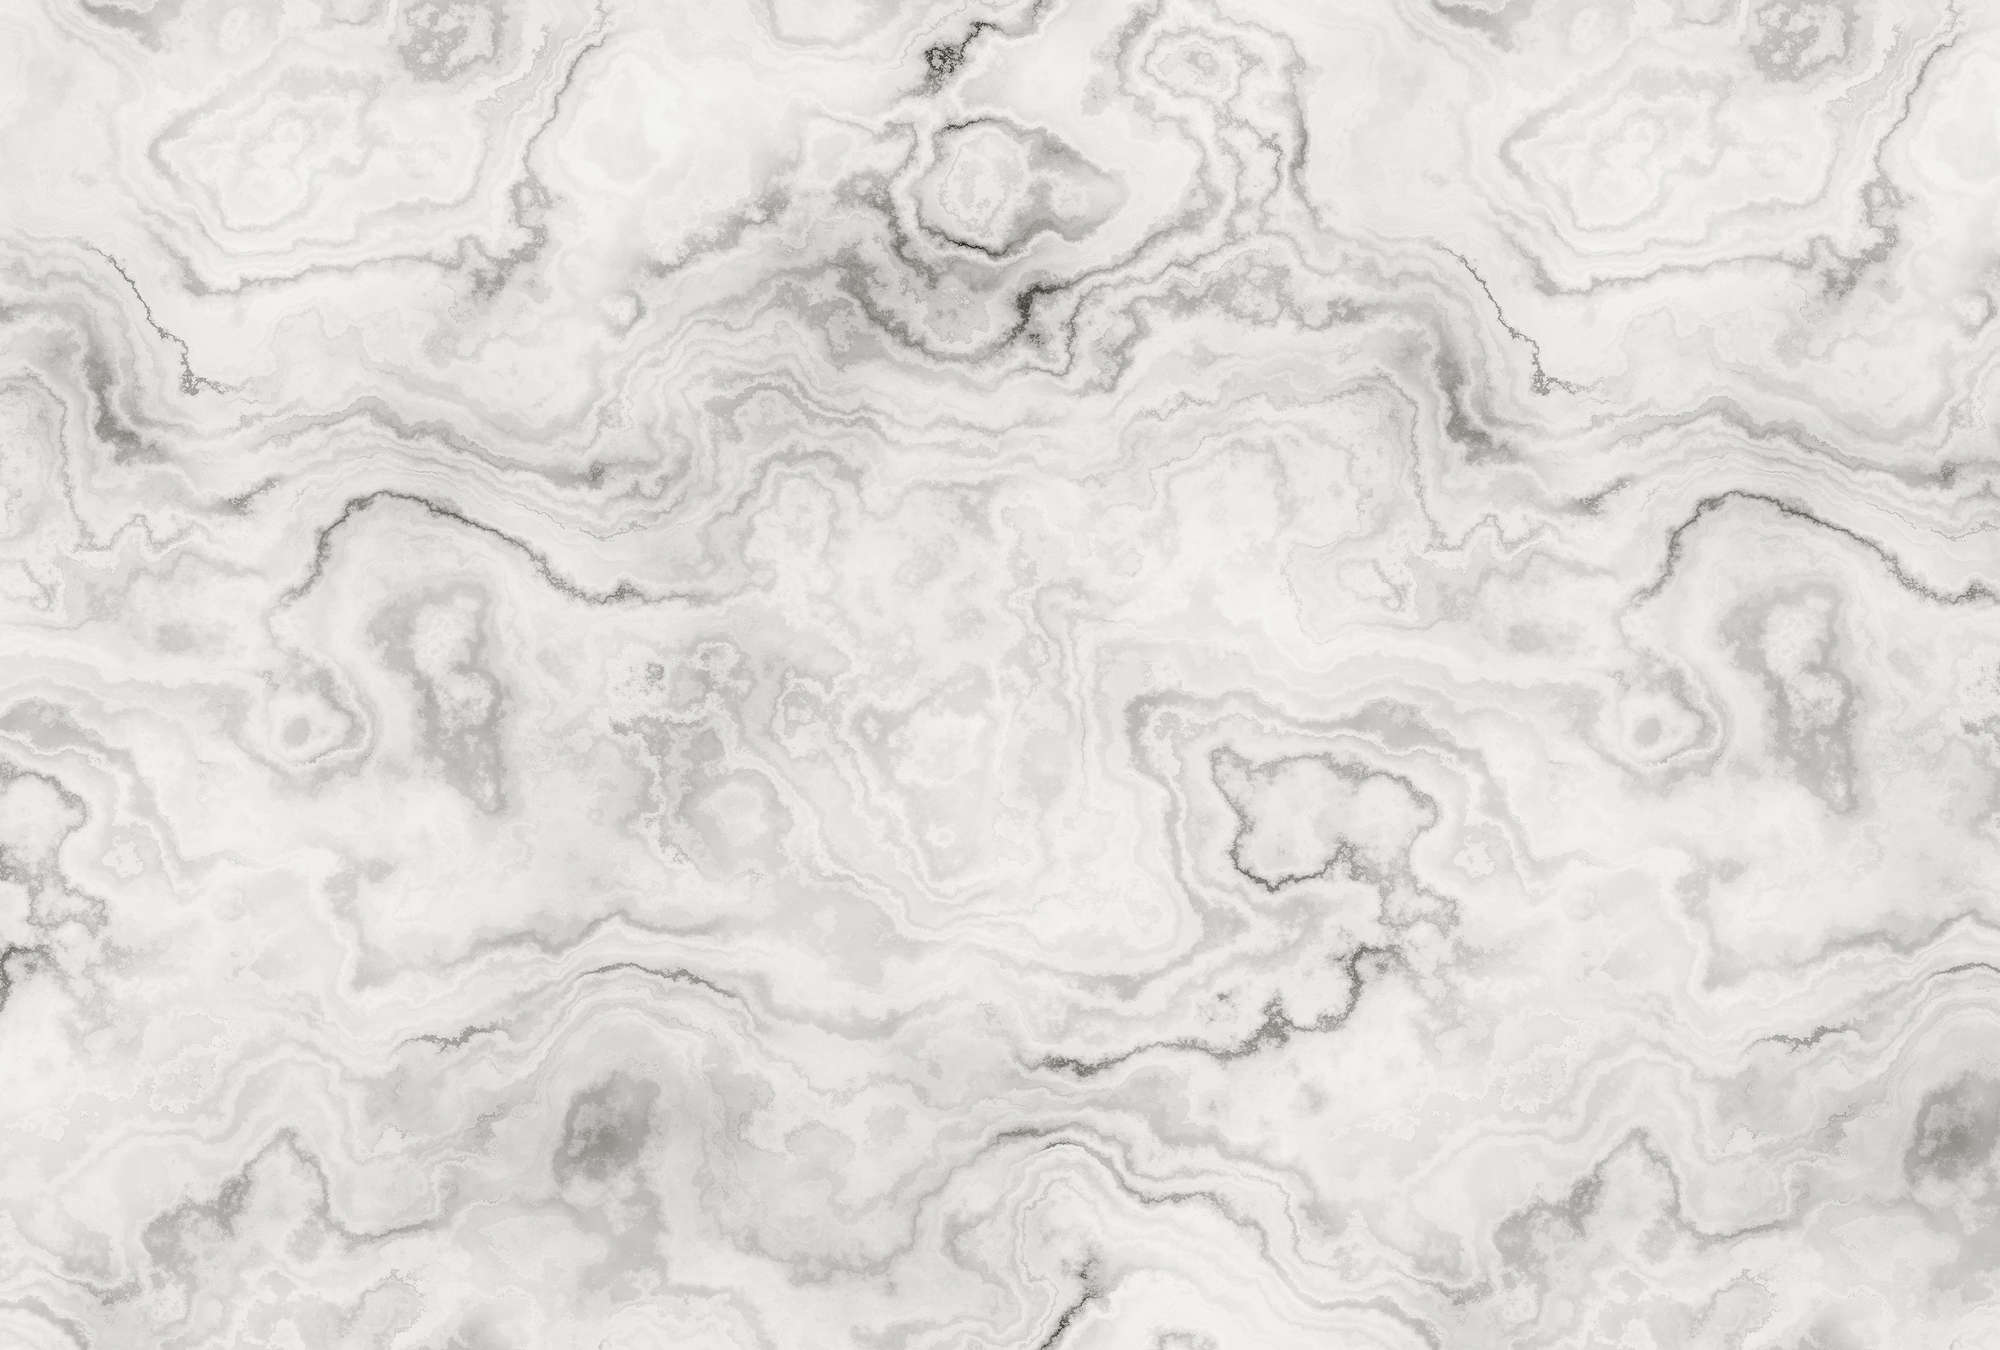             Carrara 1 - Elegant marble-look wallpaper - Grey, White | Premium smooth fleece
        